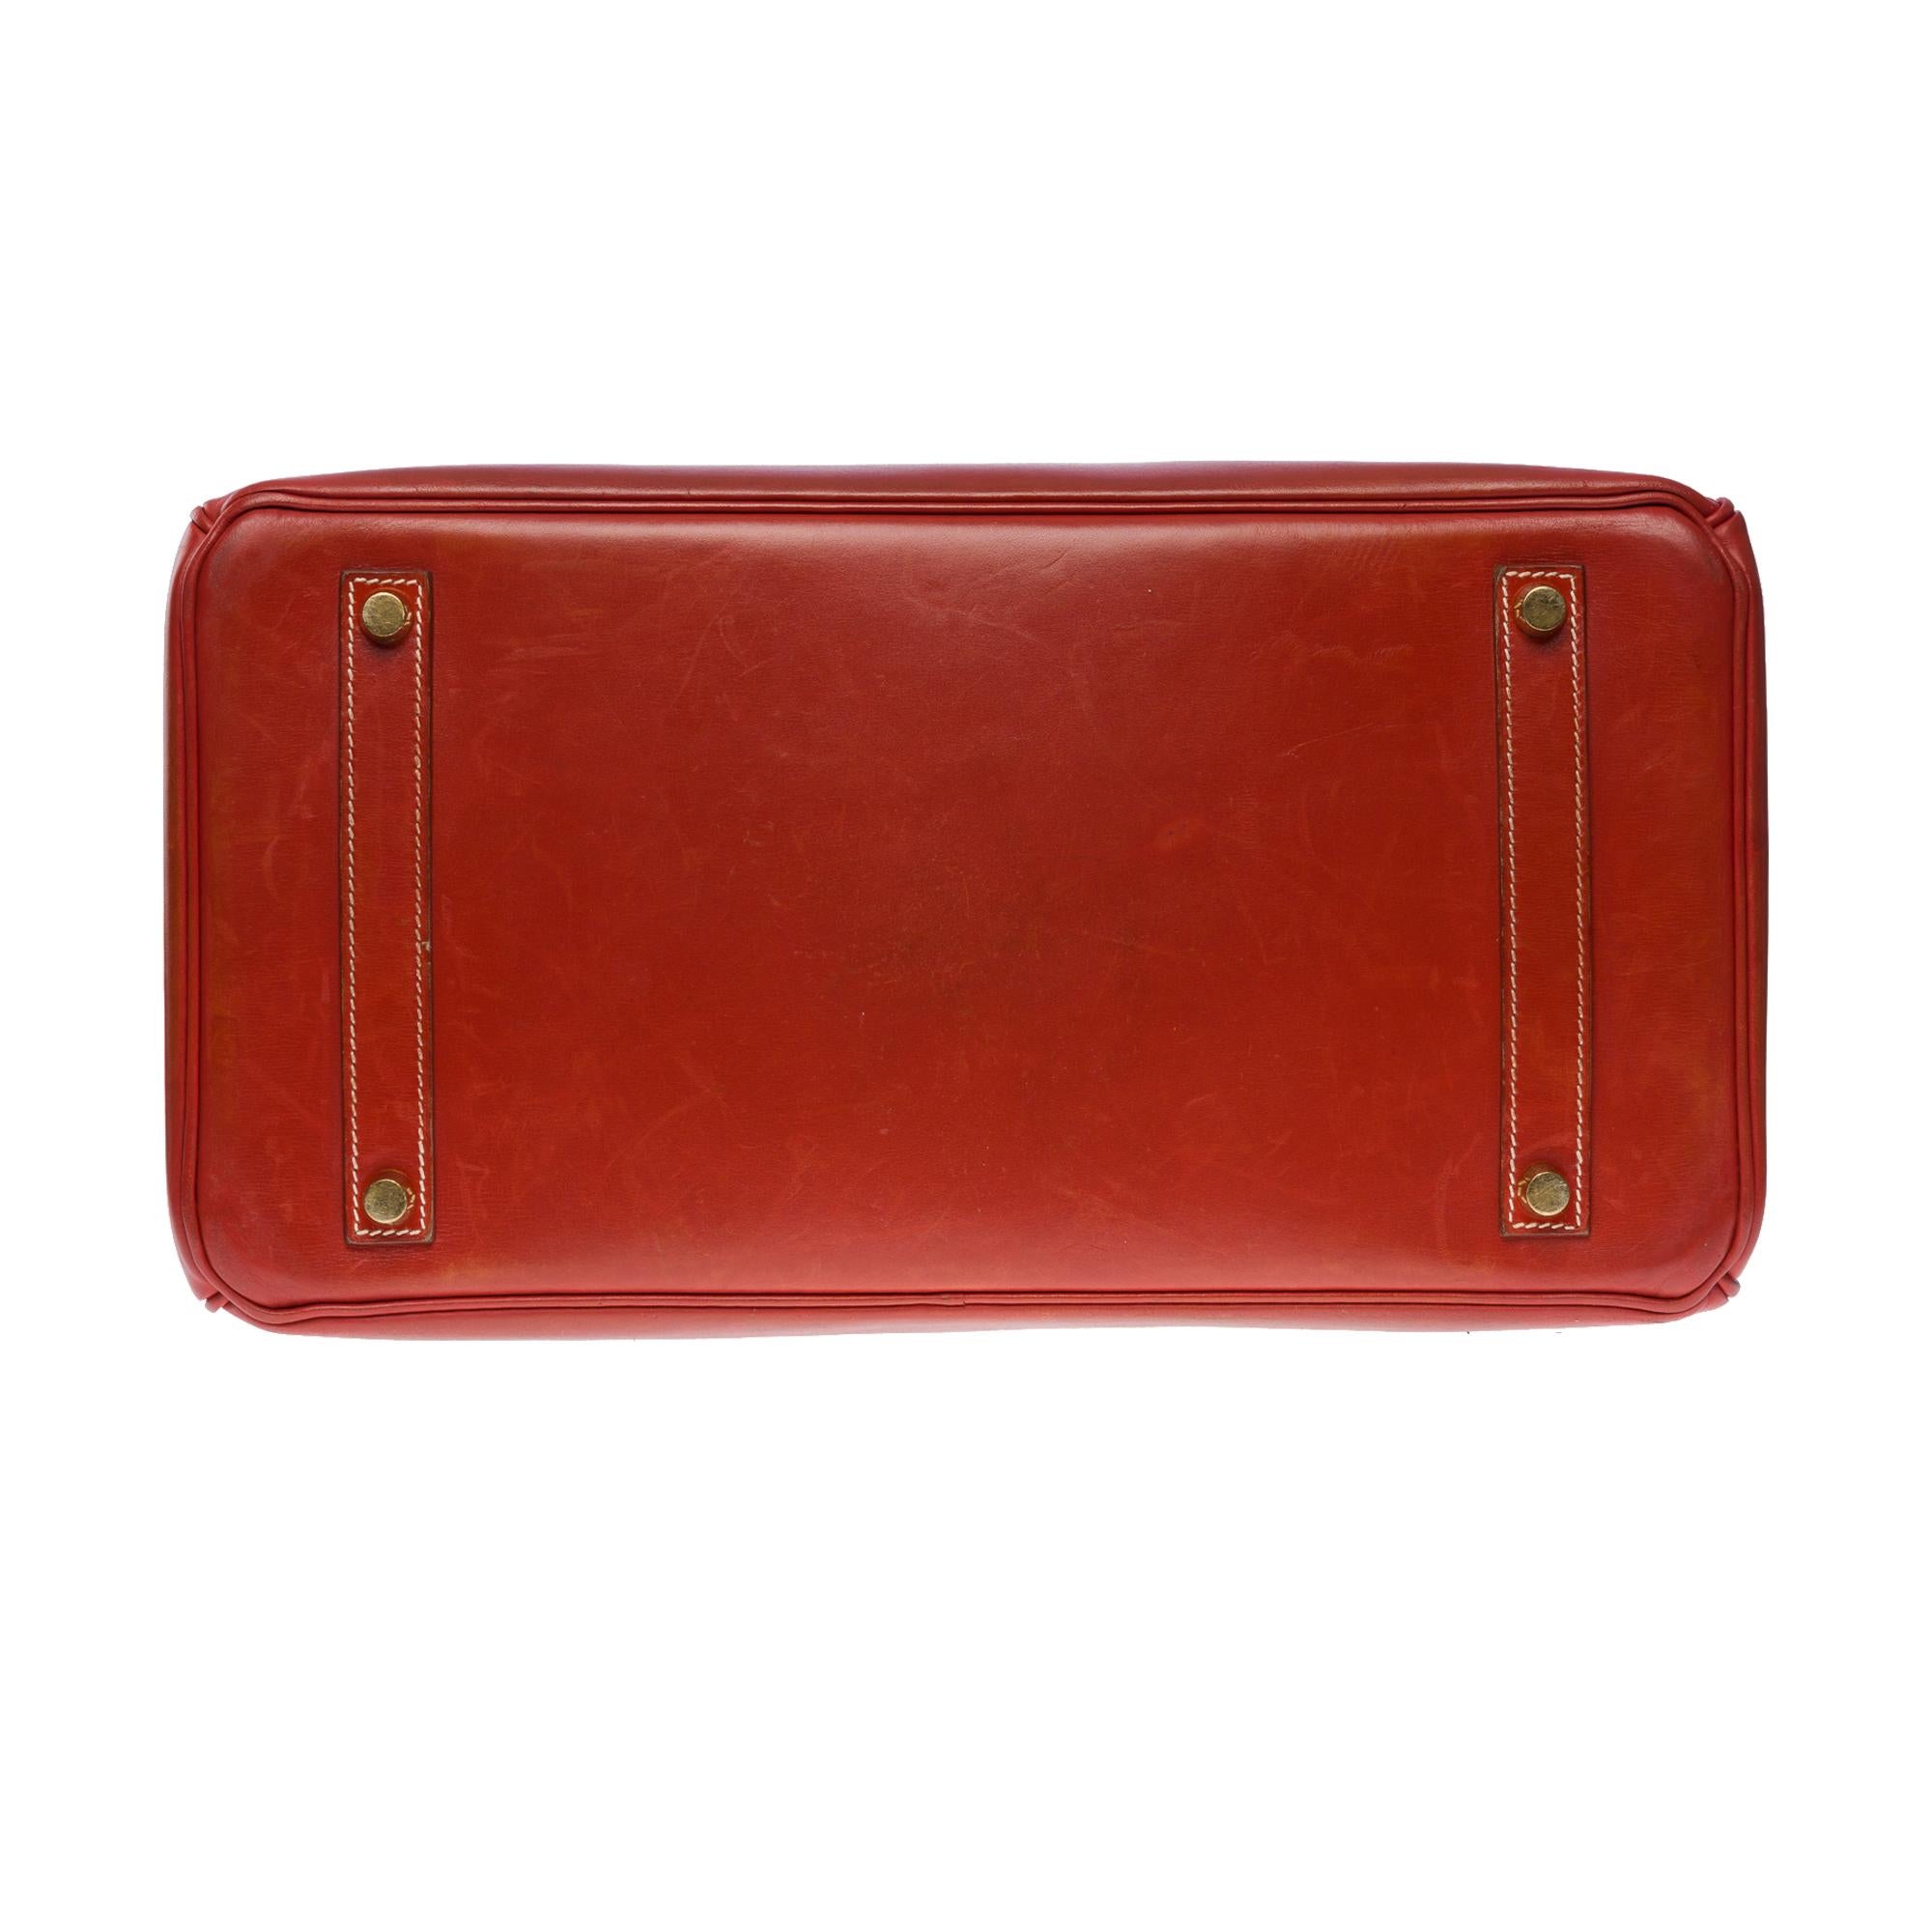 Amazing & Rare Hermès Birkin 35 handbag in Cognac box calfskin leather, GHW 5